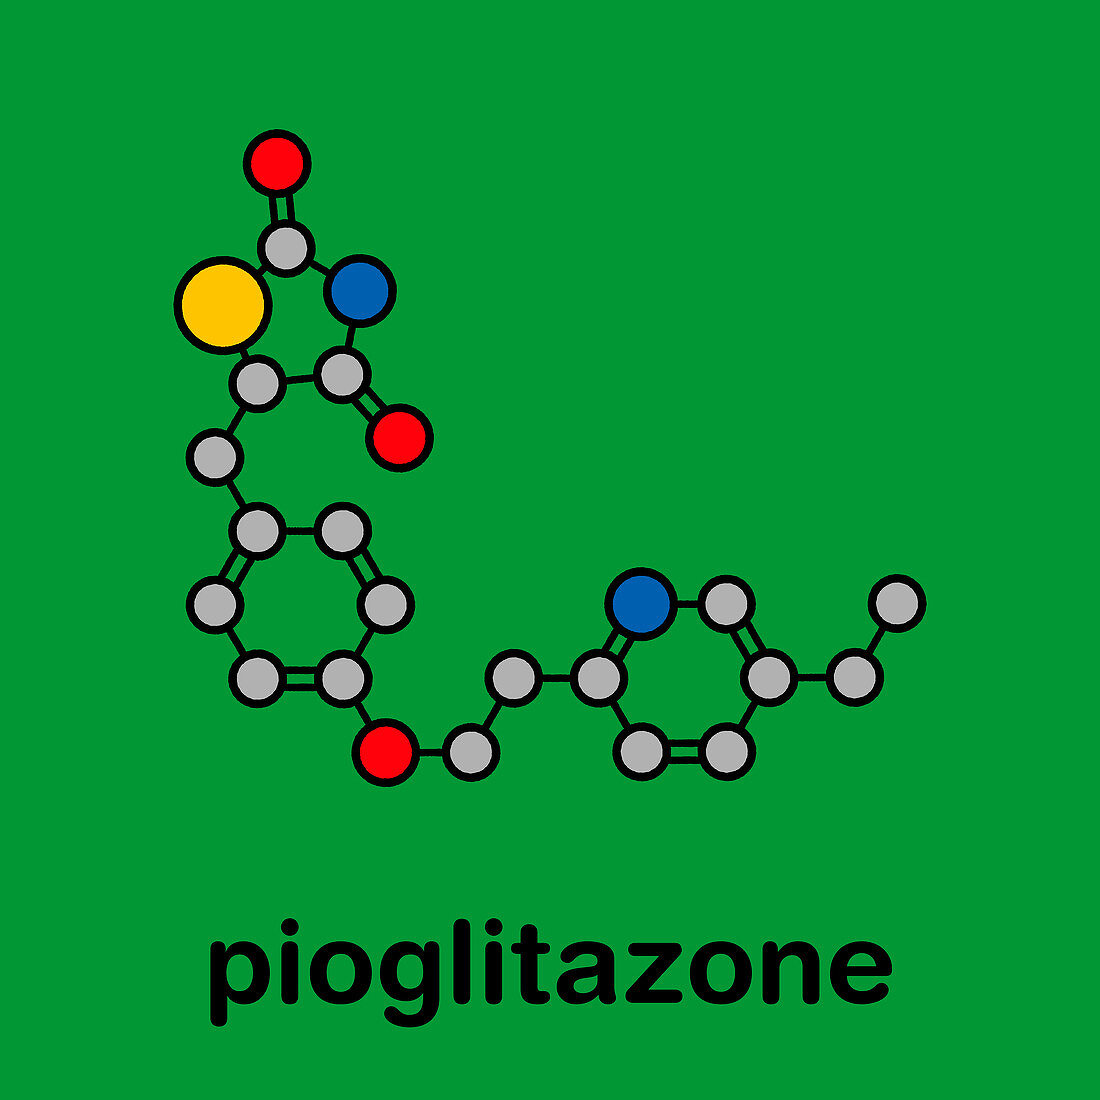 Pioglitazone diabetes drug, molecular model